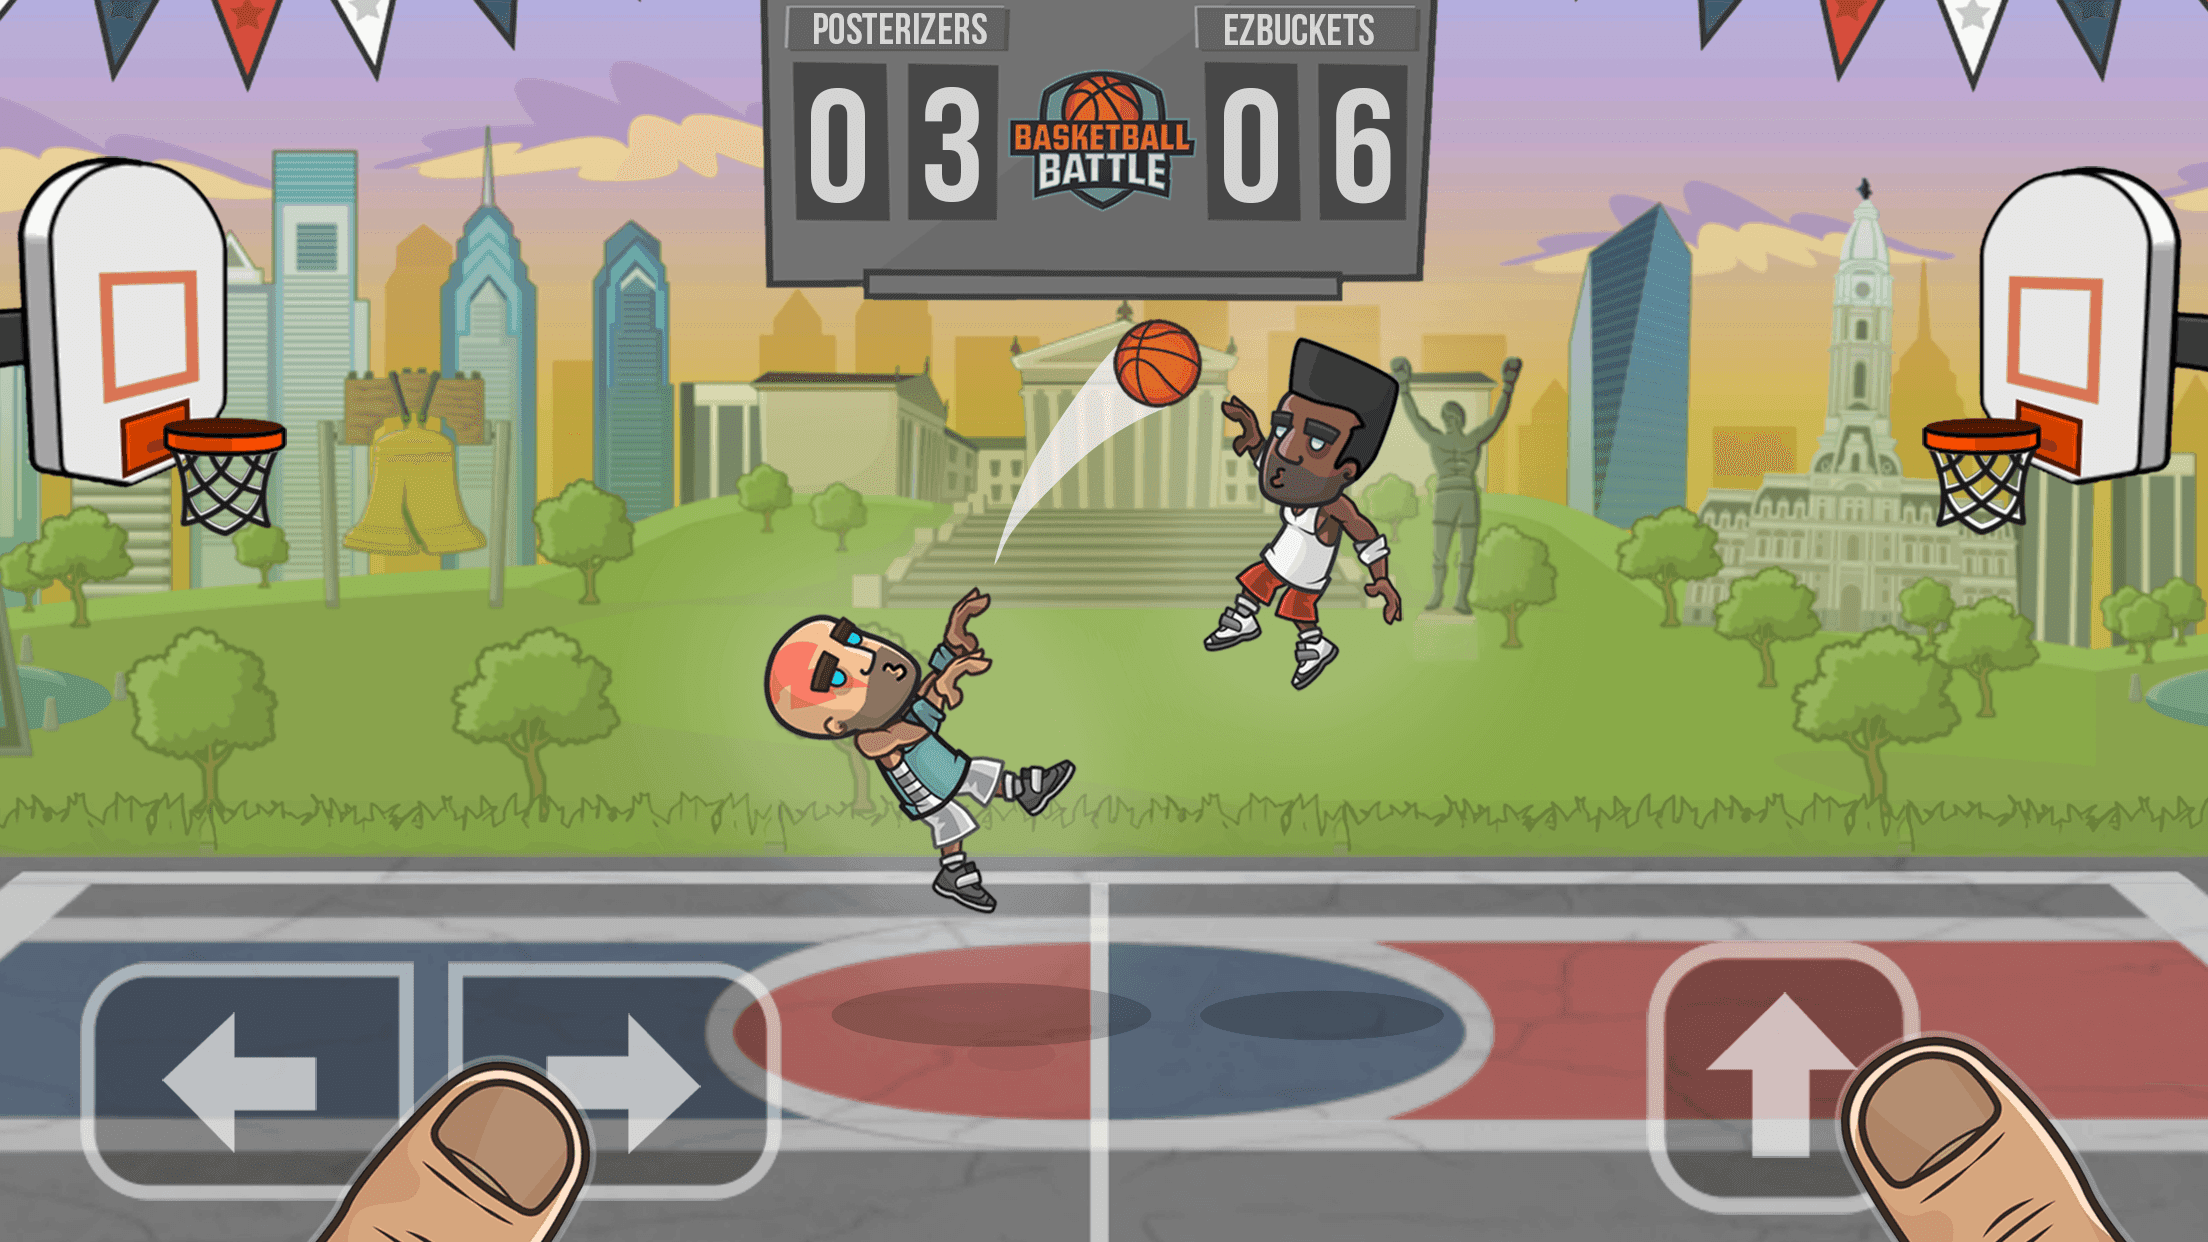 Screenshot 1 of Labanan sa Basketbol 2.4.8